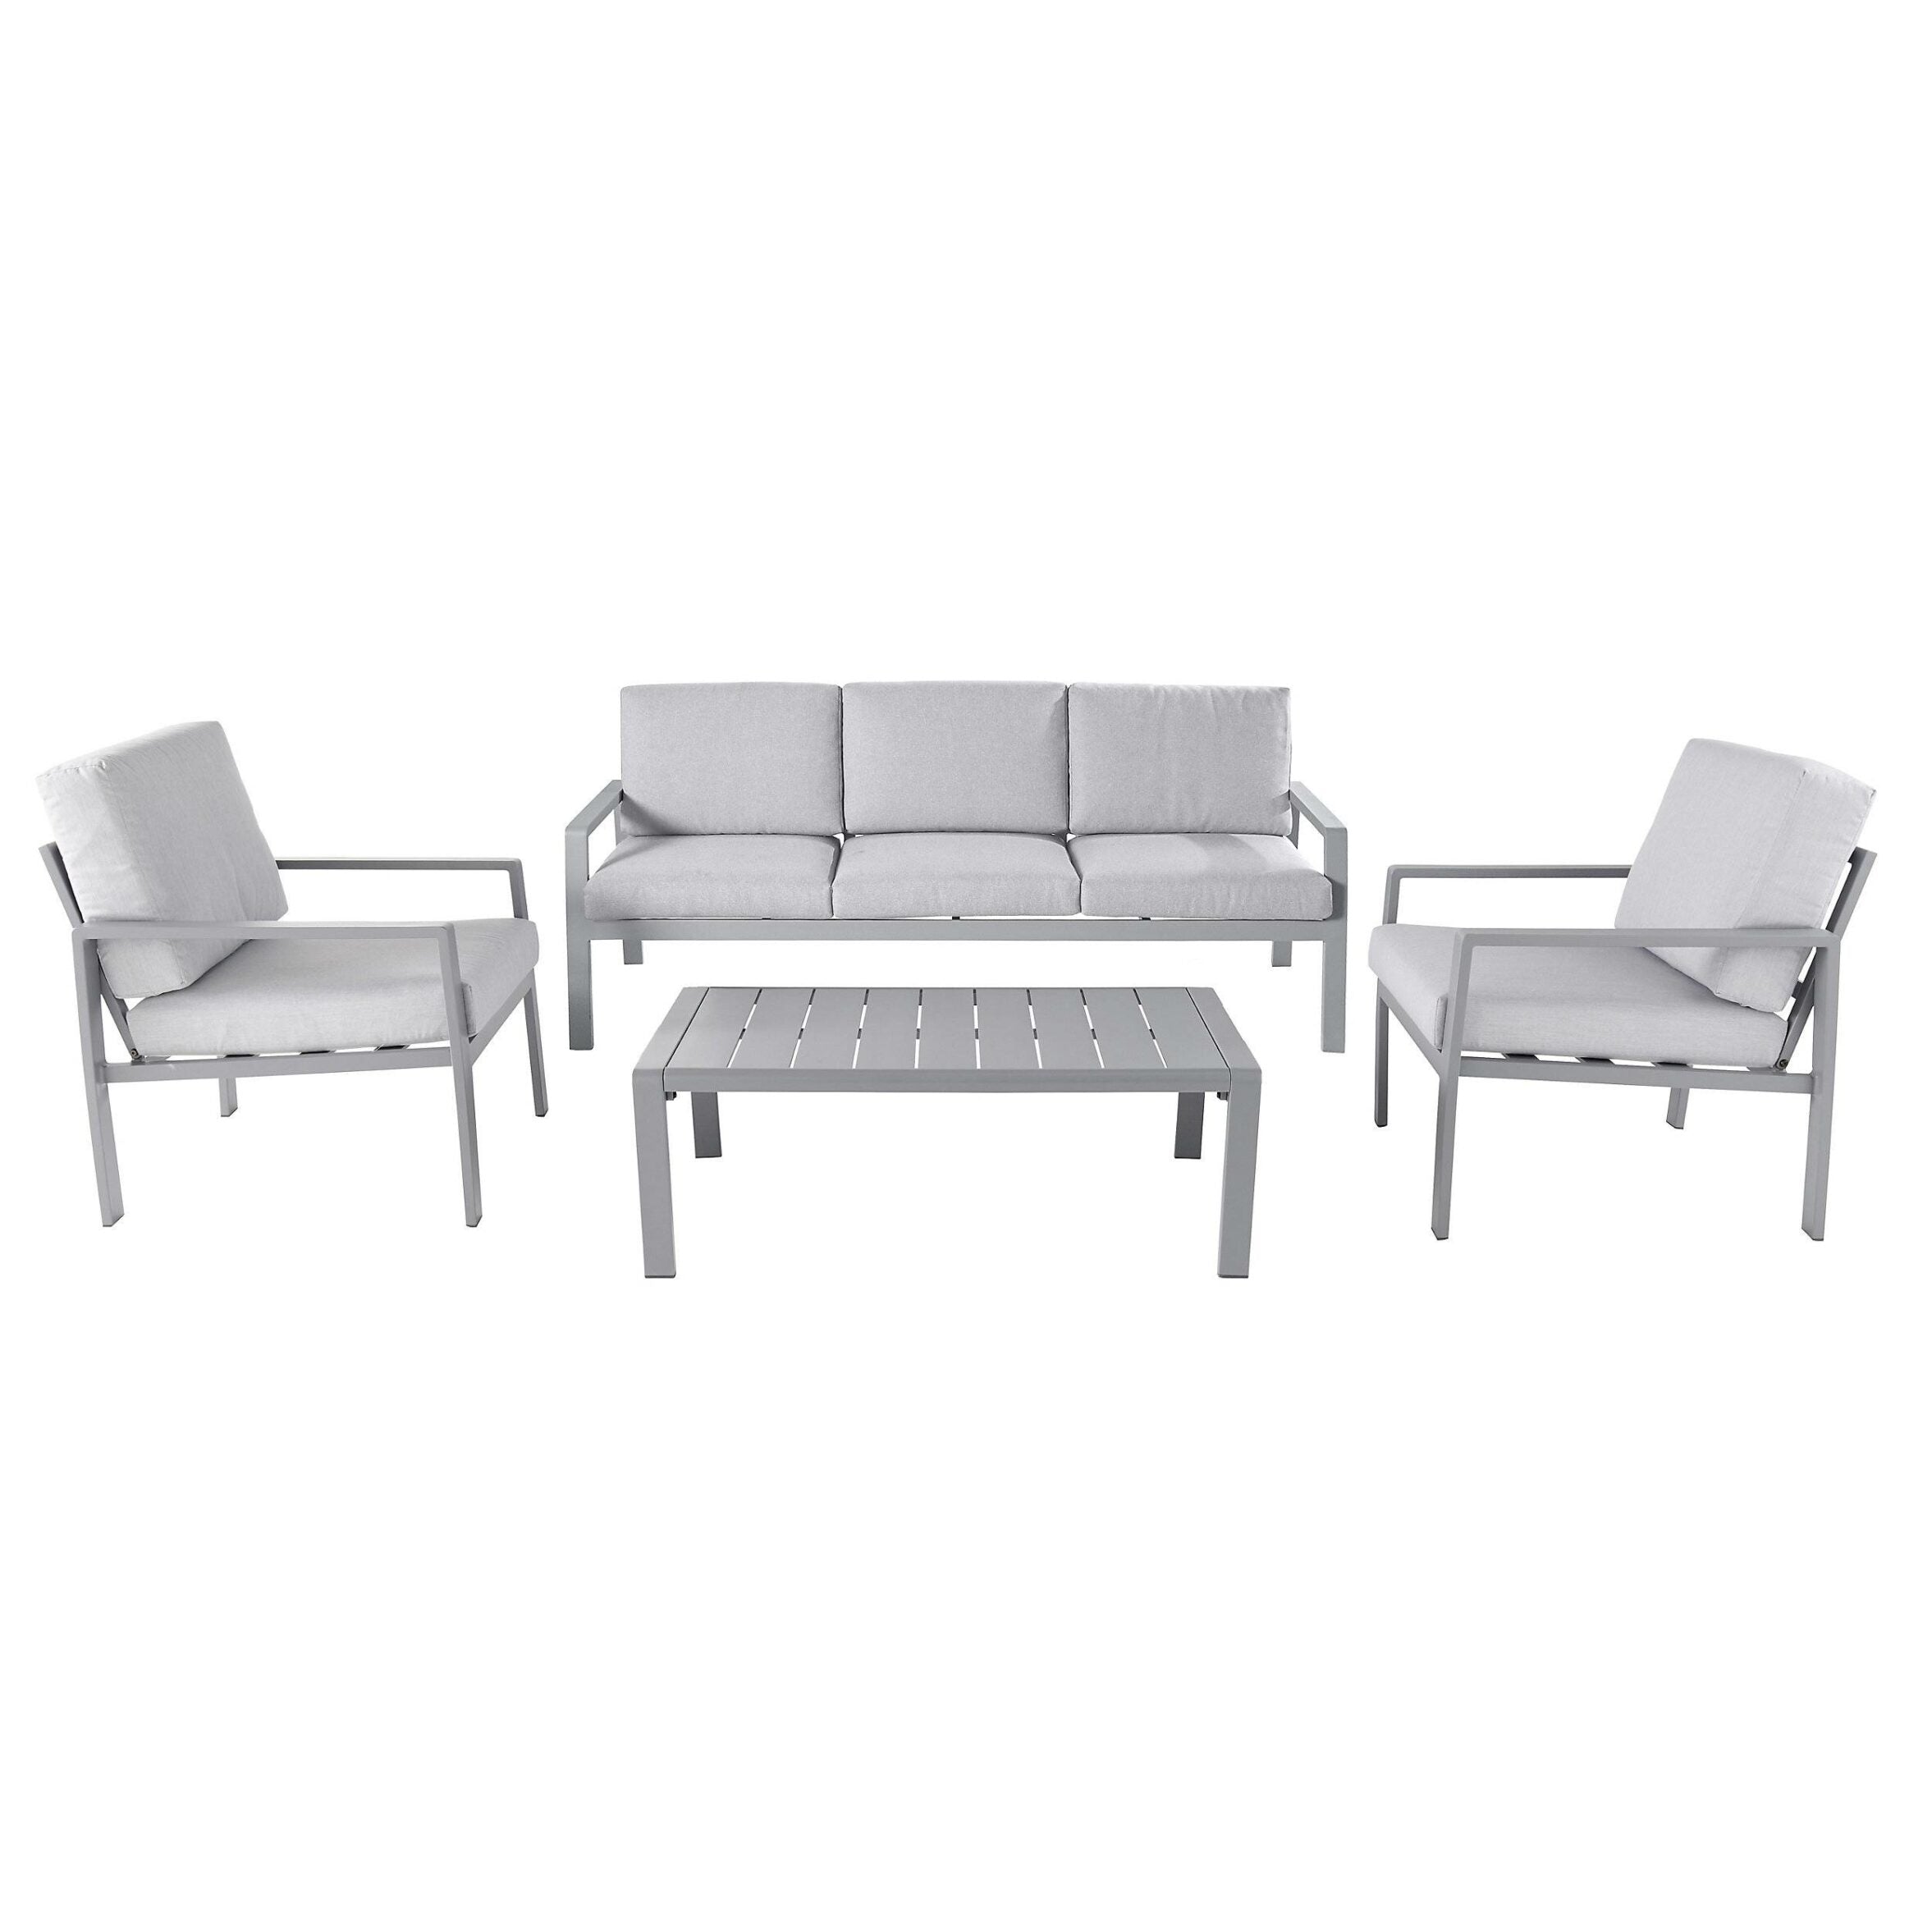 GoodHome Moorea Steel grey Metal 5 Seater Coffee set - Garden Furniture 2732